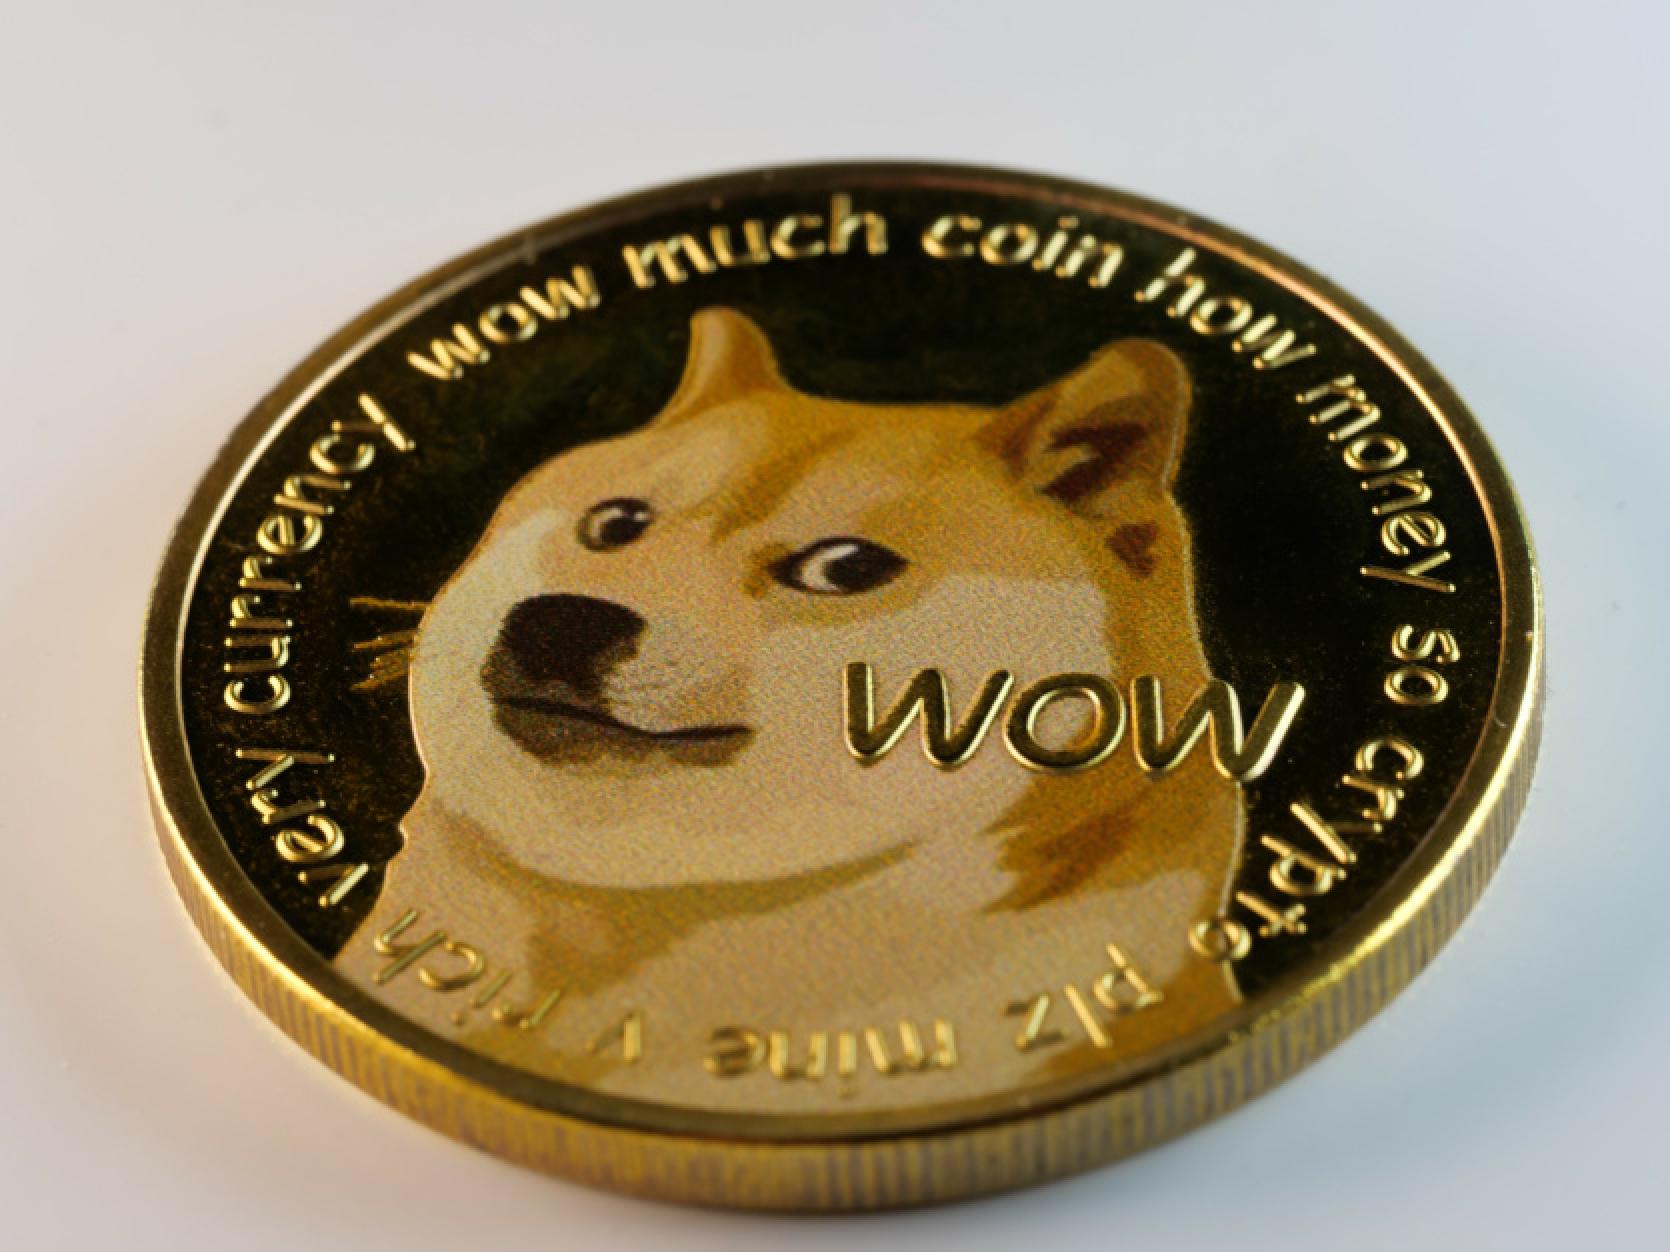 "Bullish" bets on Dogecoin hit record $1 billion - meme coin up 40%